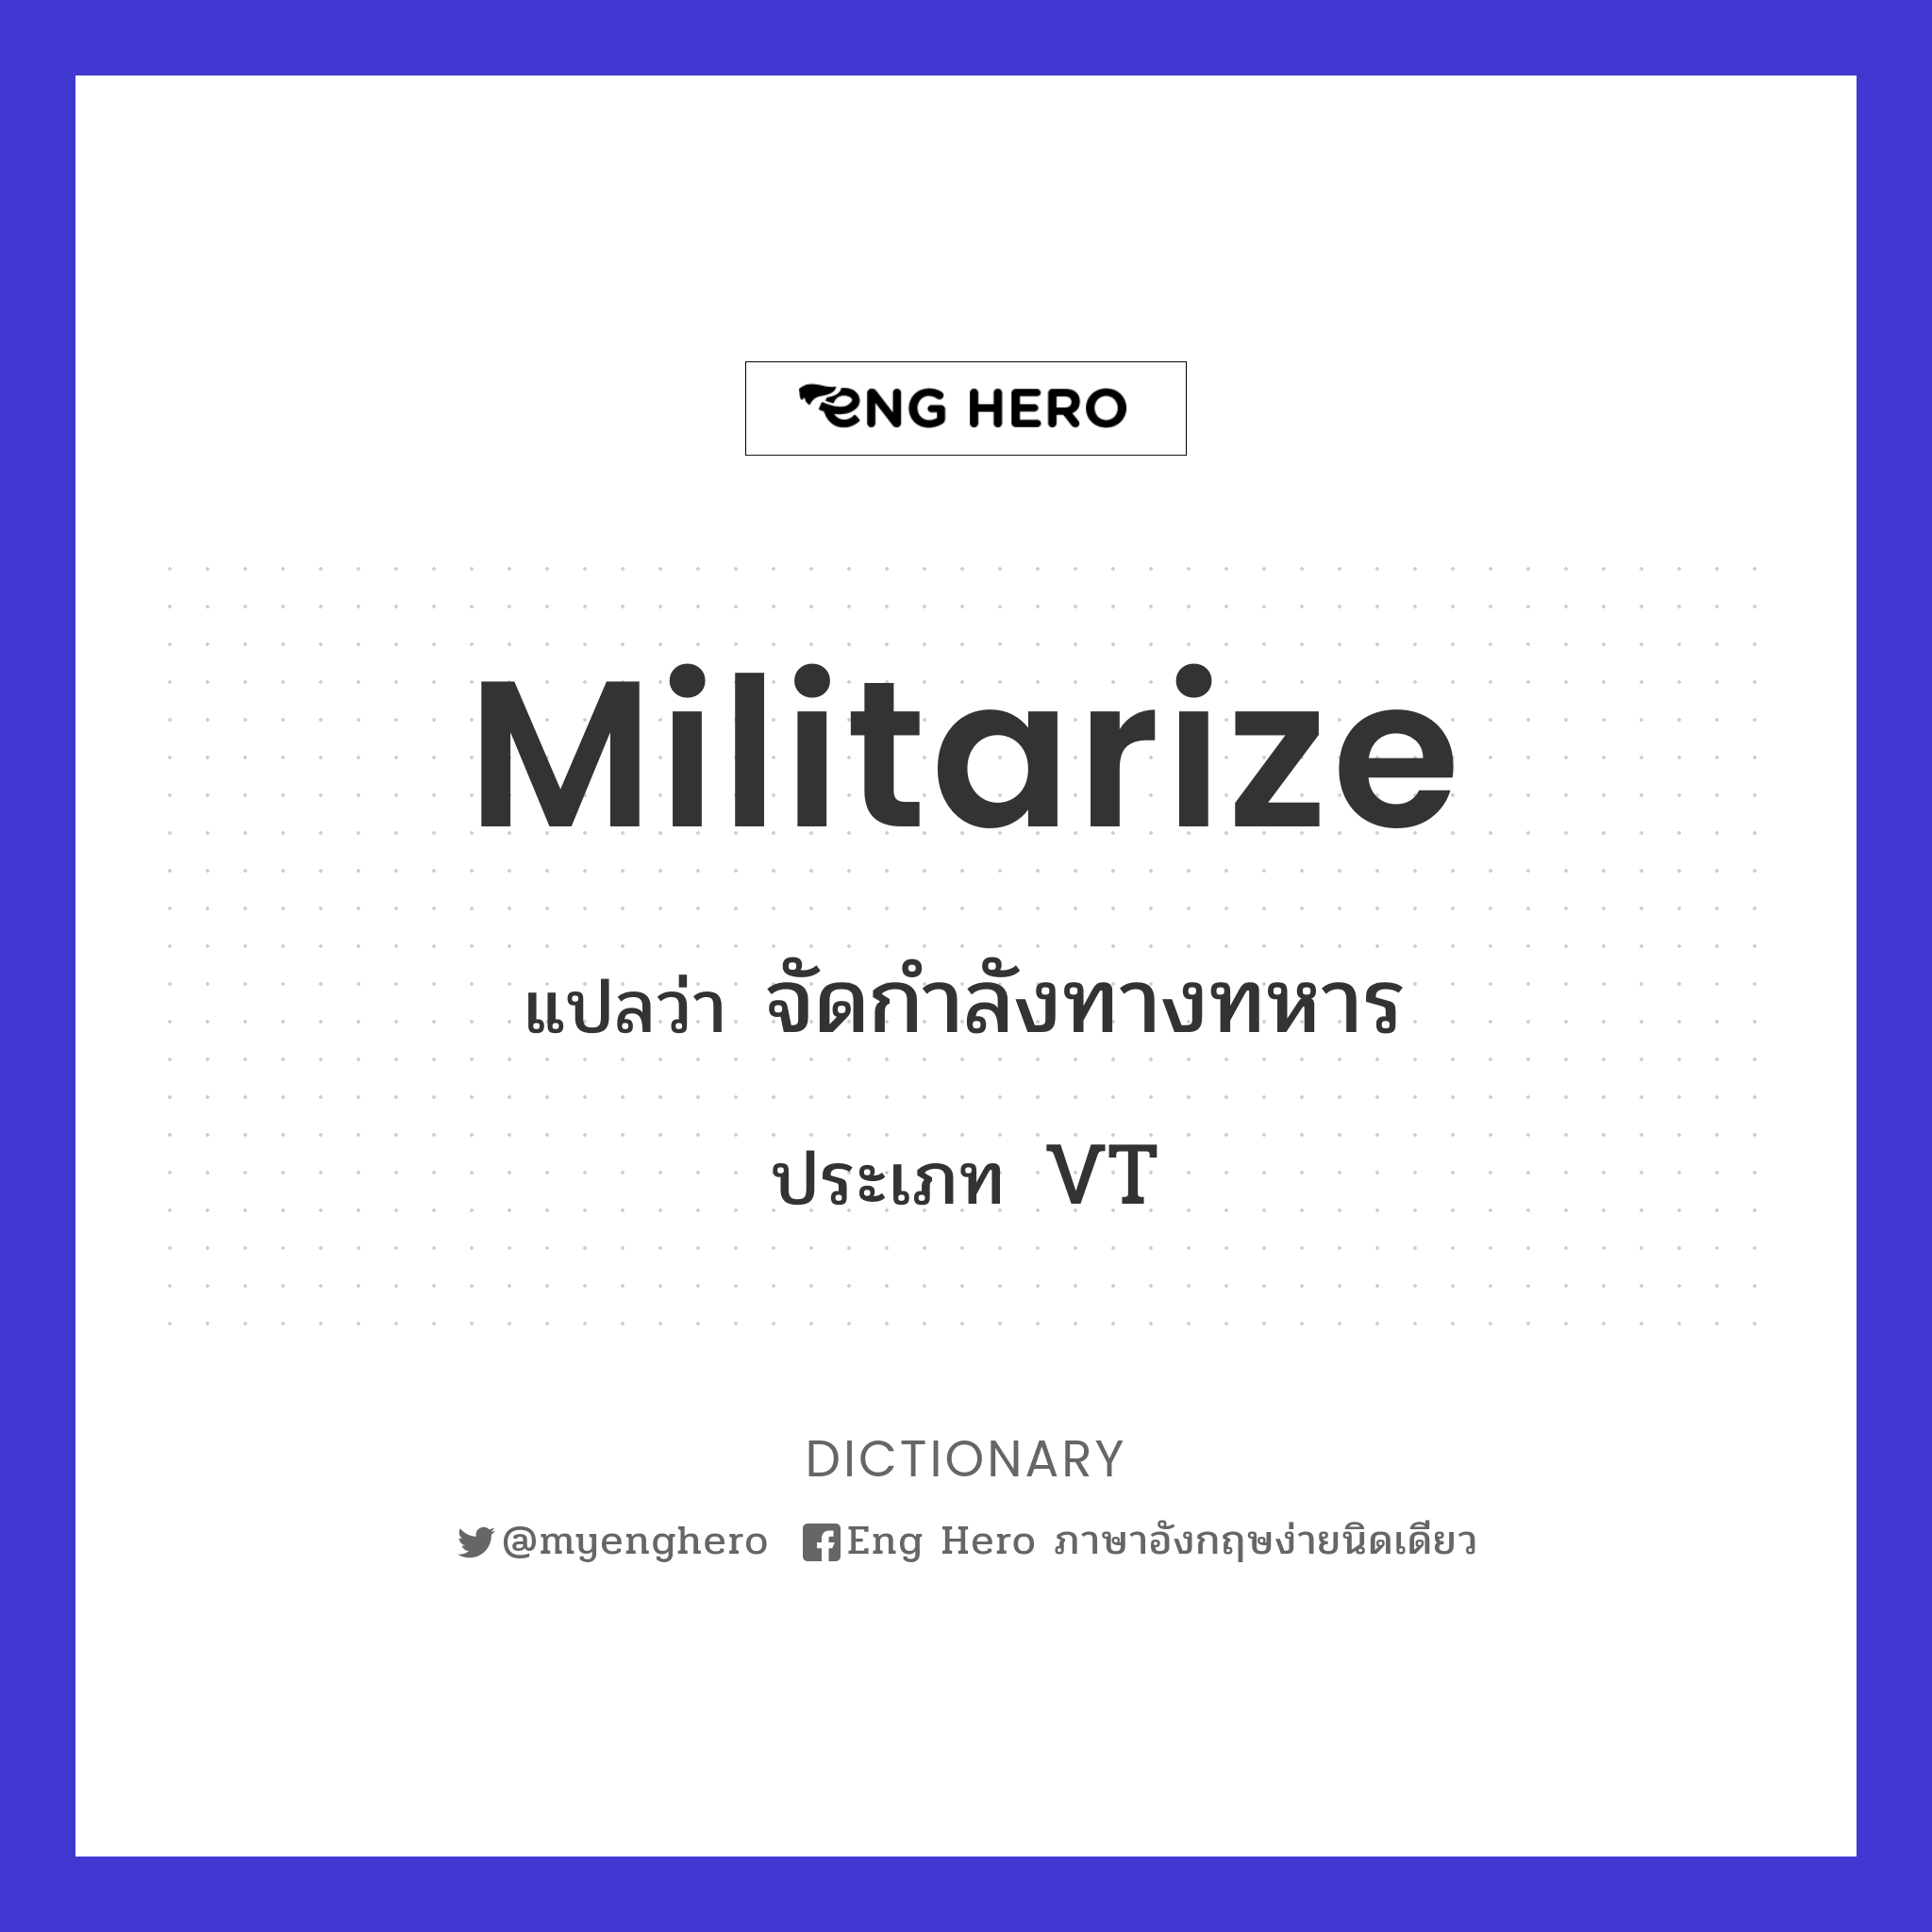 militarize